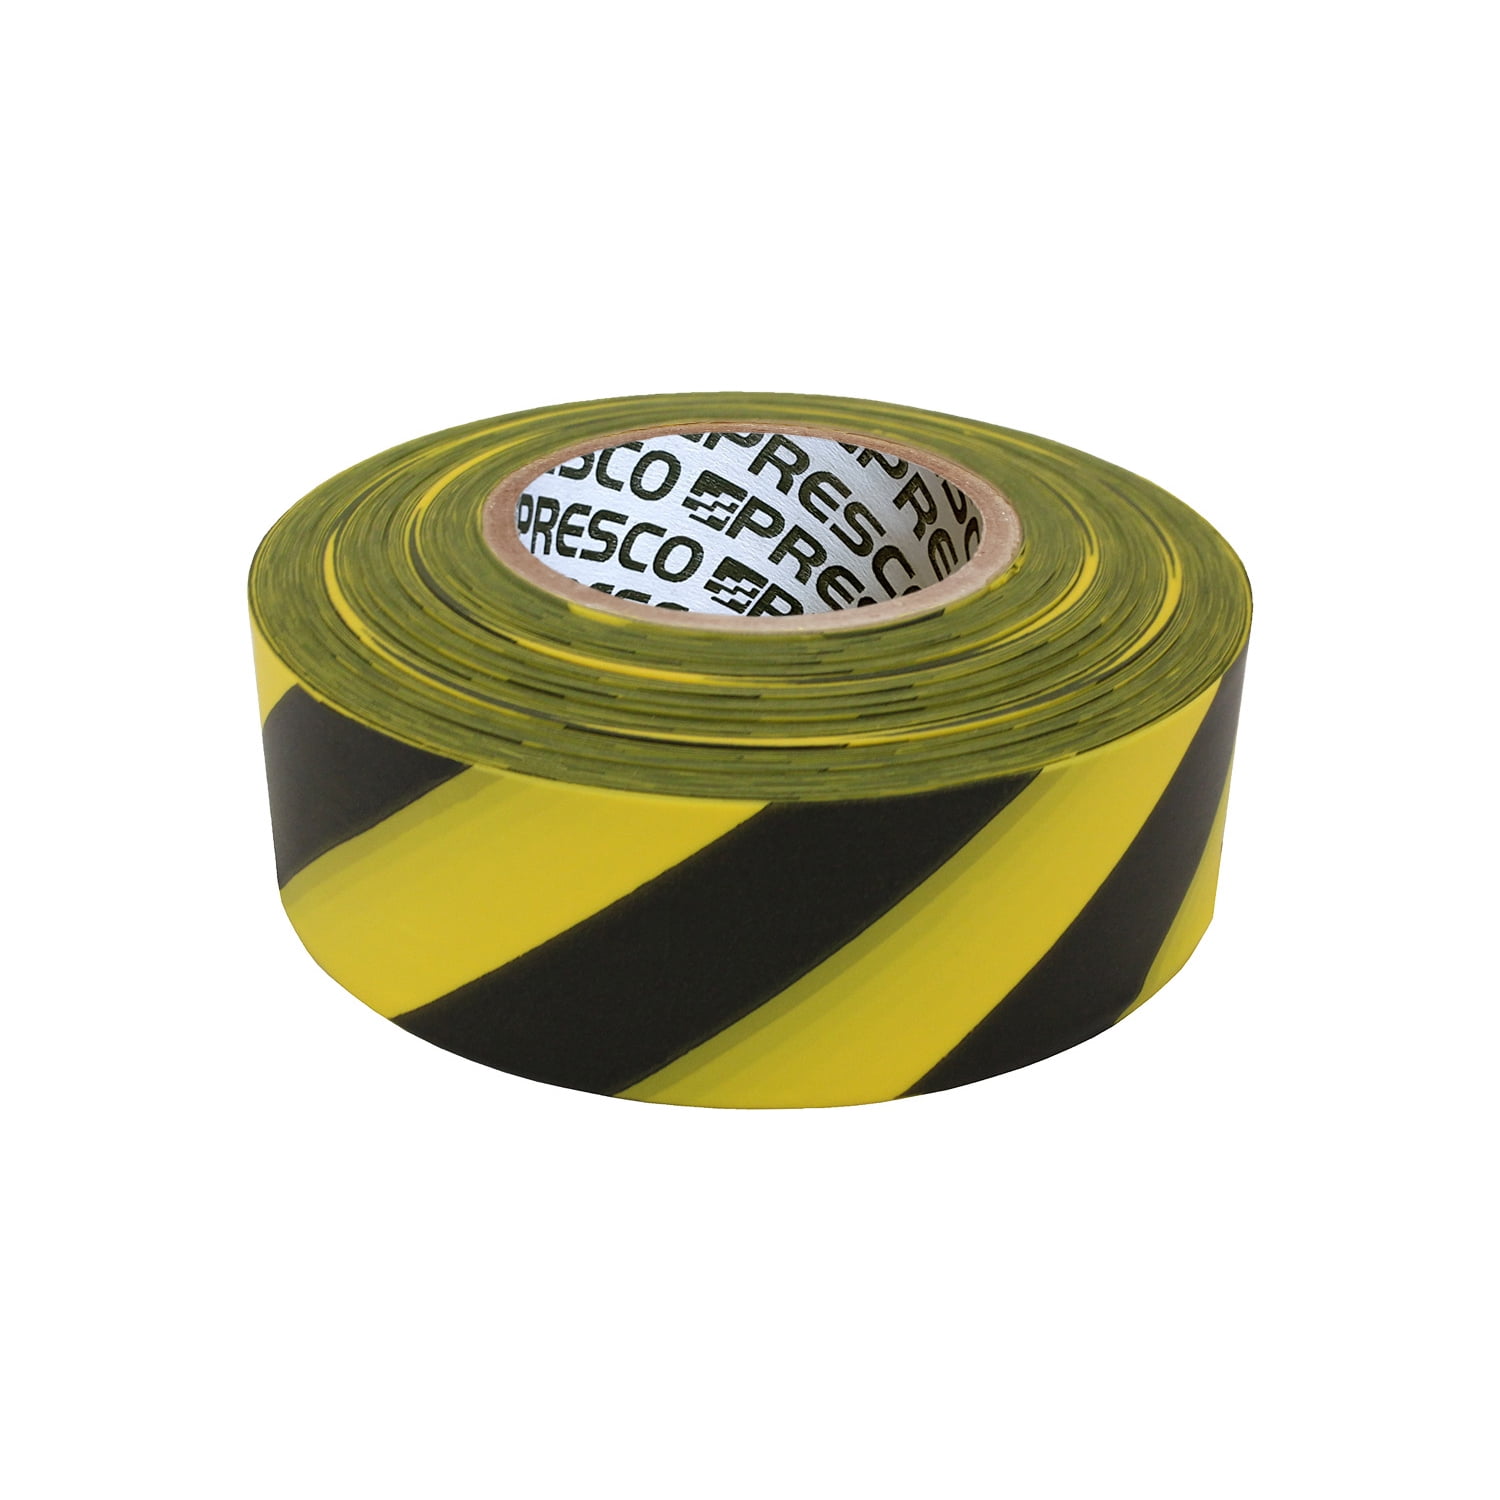 1-3/16 in Yellow/Red Stripe x 300 ft. Presco Stripe Roll Flagging Tape 